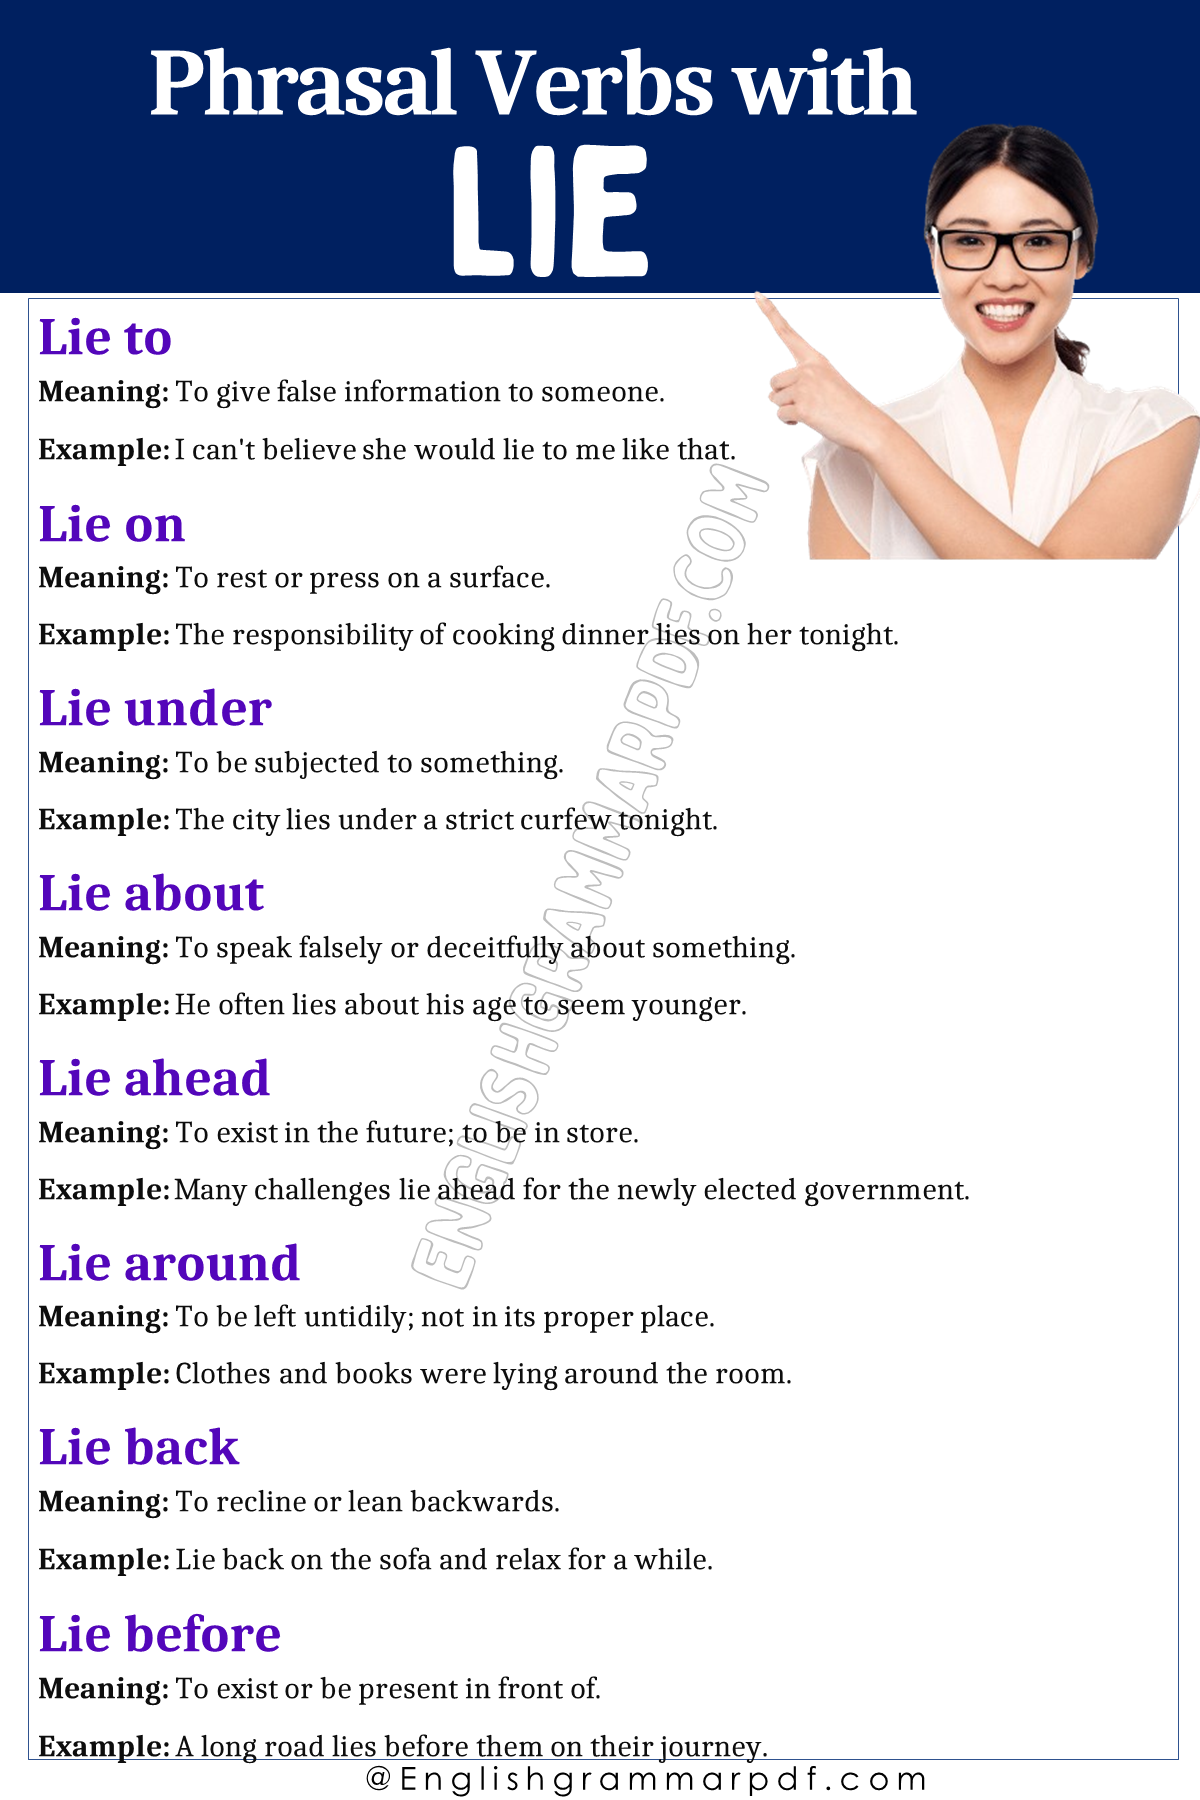 Phrasal Verbs with Lie